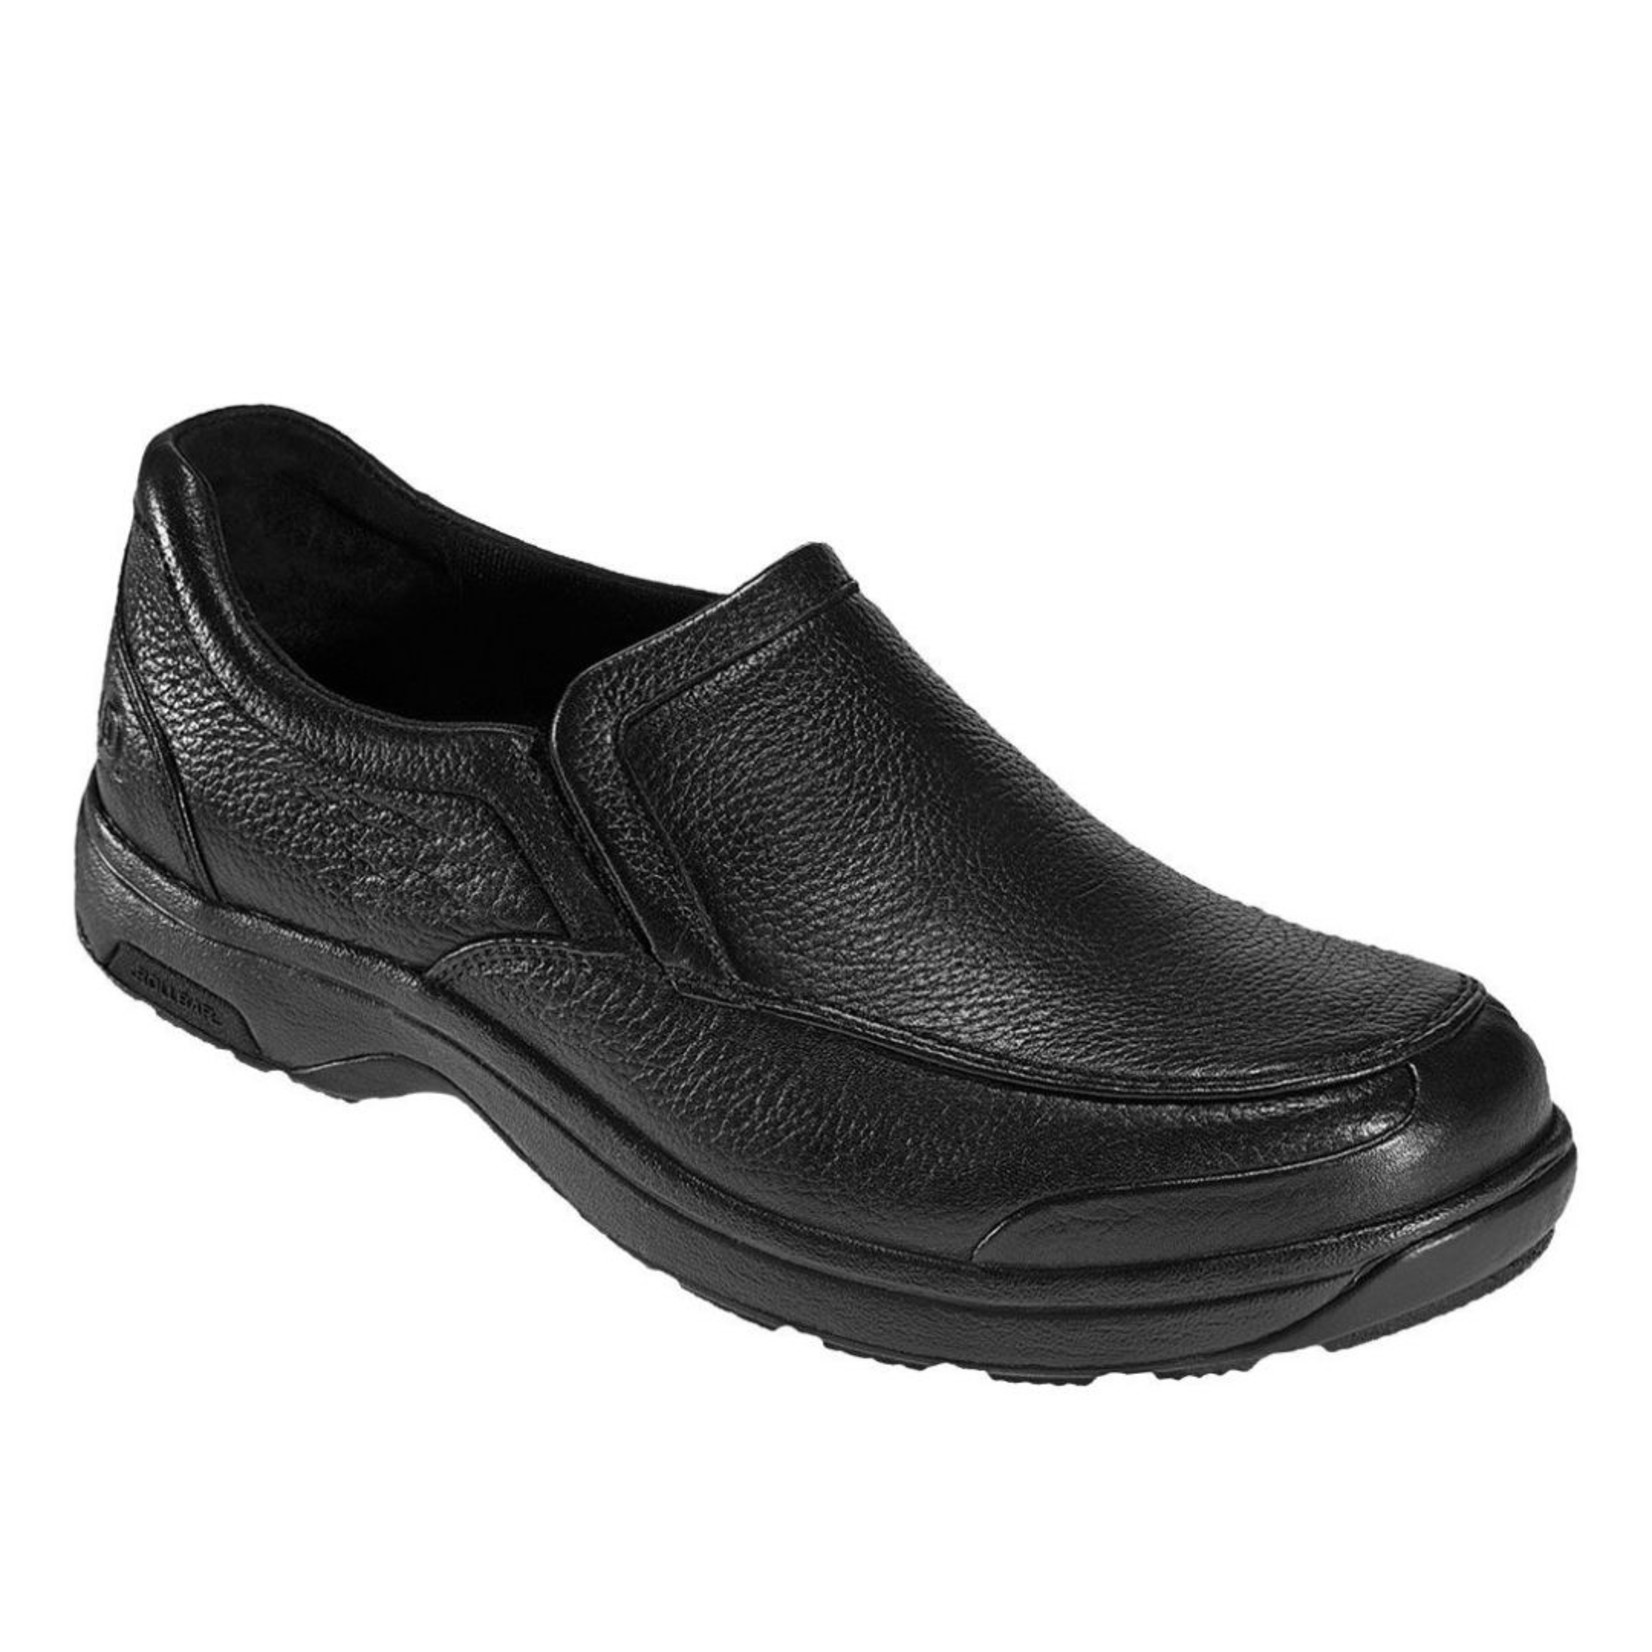 Dunham Battery Park Men’s Slip-On Shoes - Shippy Shoes